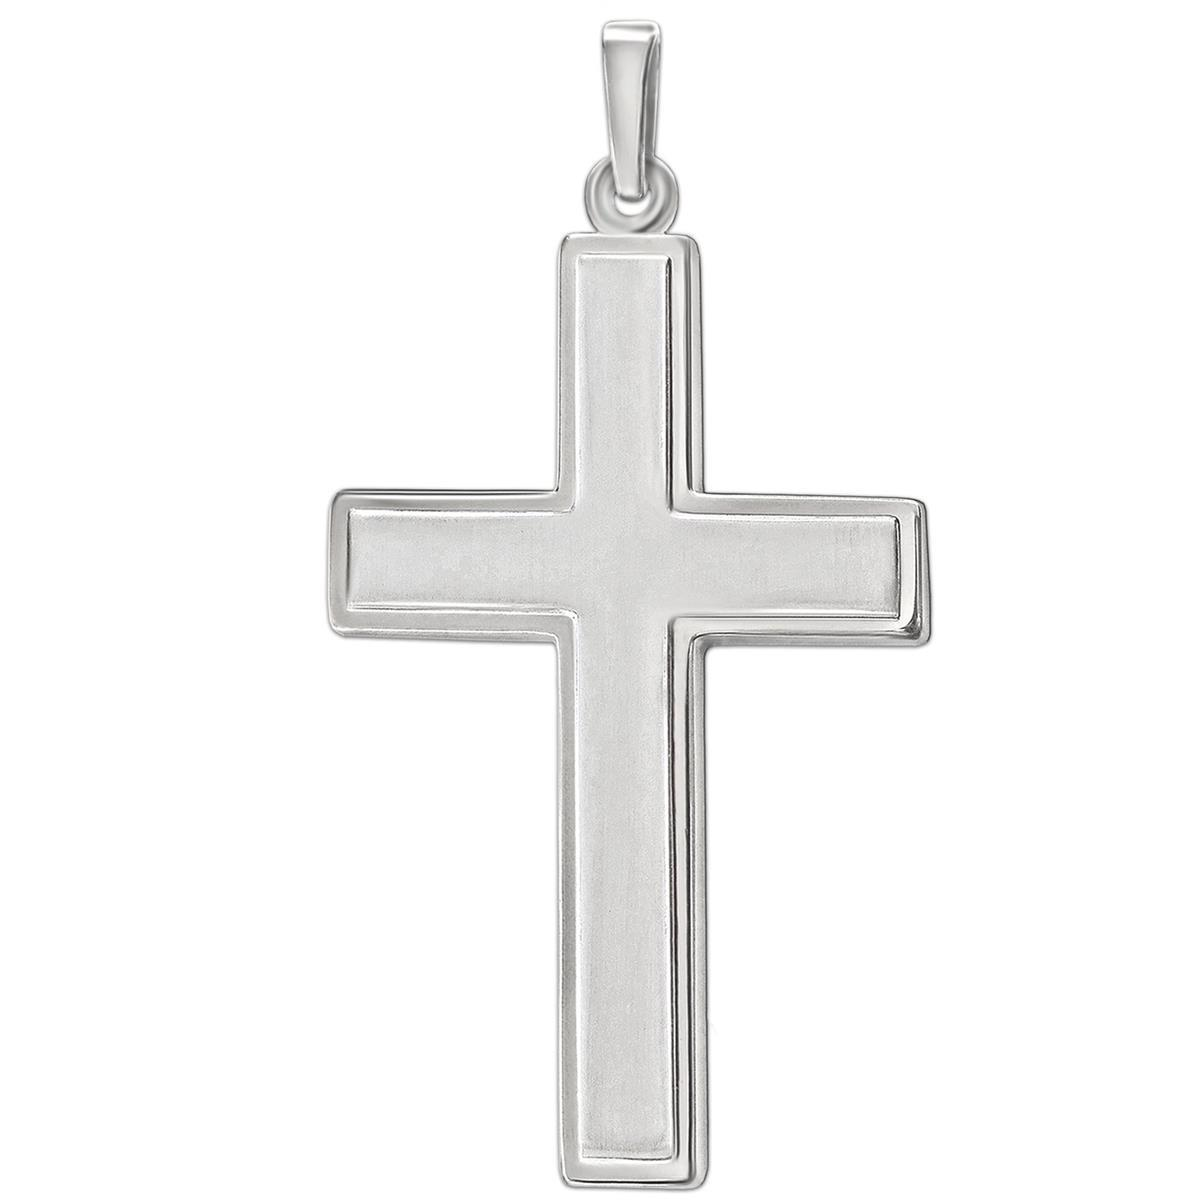 Silbernes großes Kreuz 32 mm innen seidenmatt erhaben, glänzende Kante STERLING SILBER 925